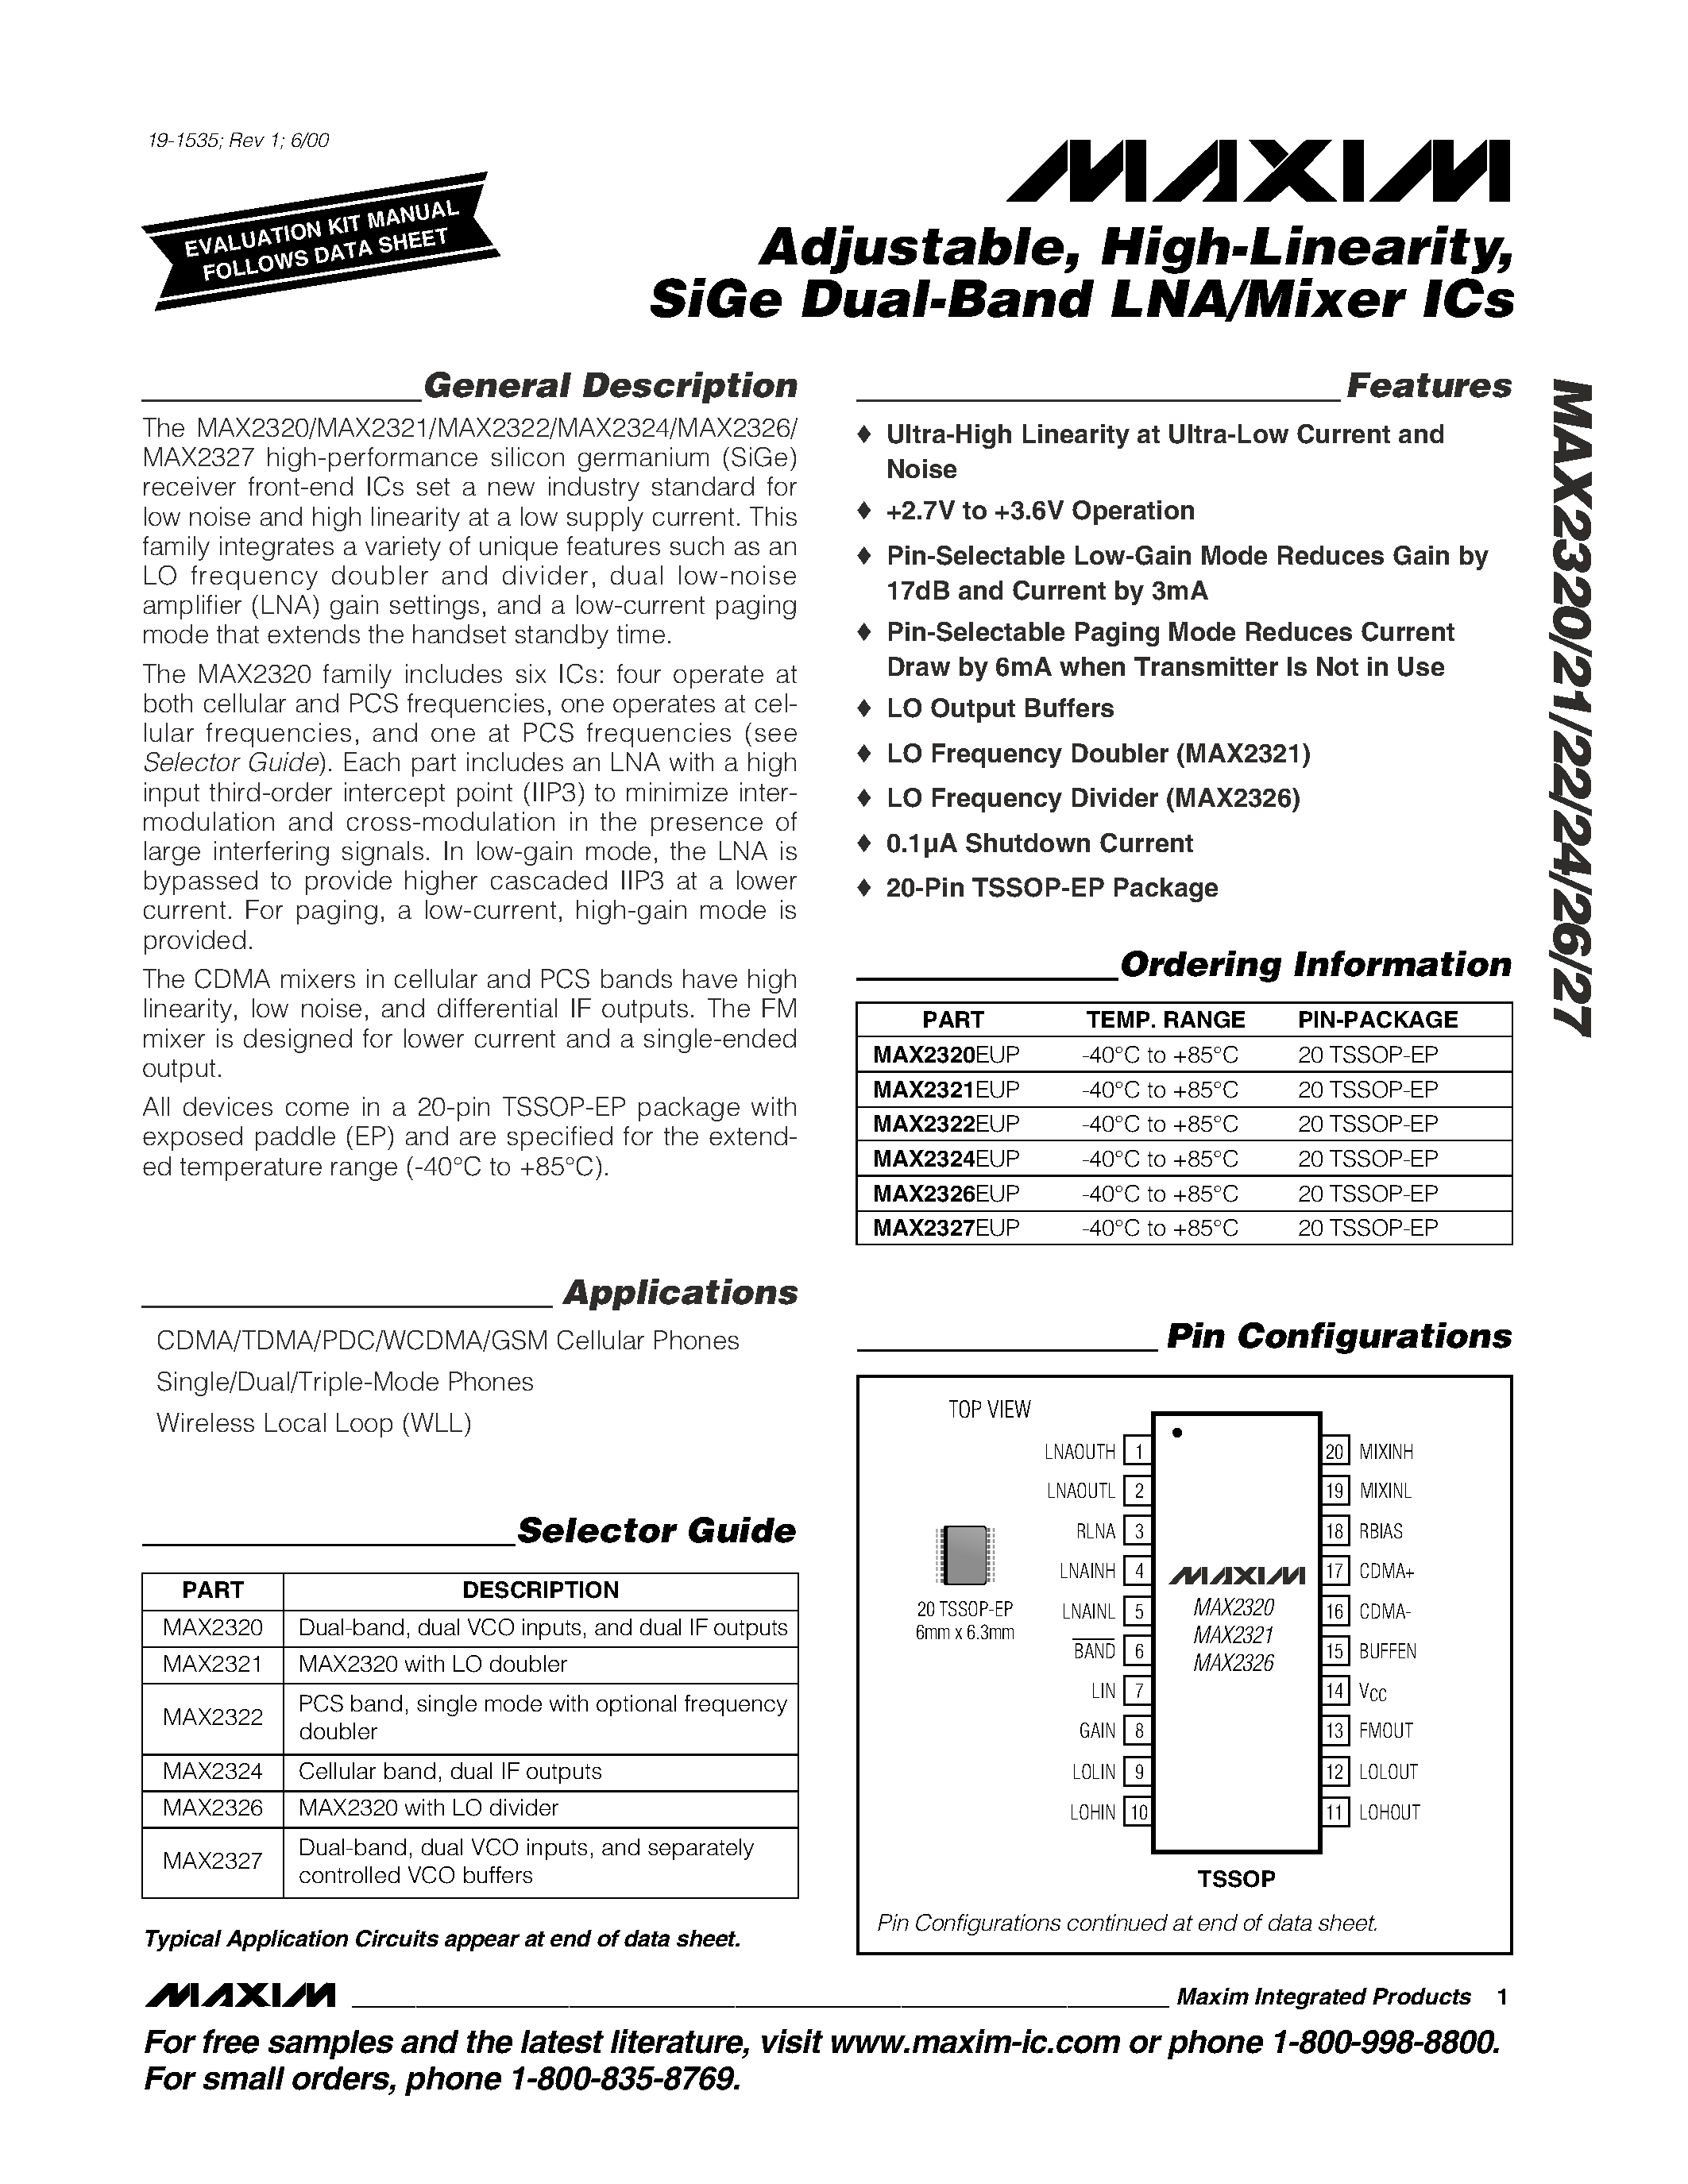 Datasheet MAX2326EUP - Adjustable / High-Linearity / SiGe Dual-Band LNA/Mixer ICs page 1